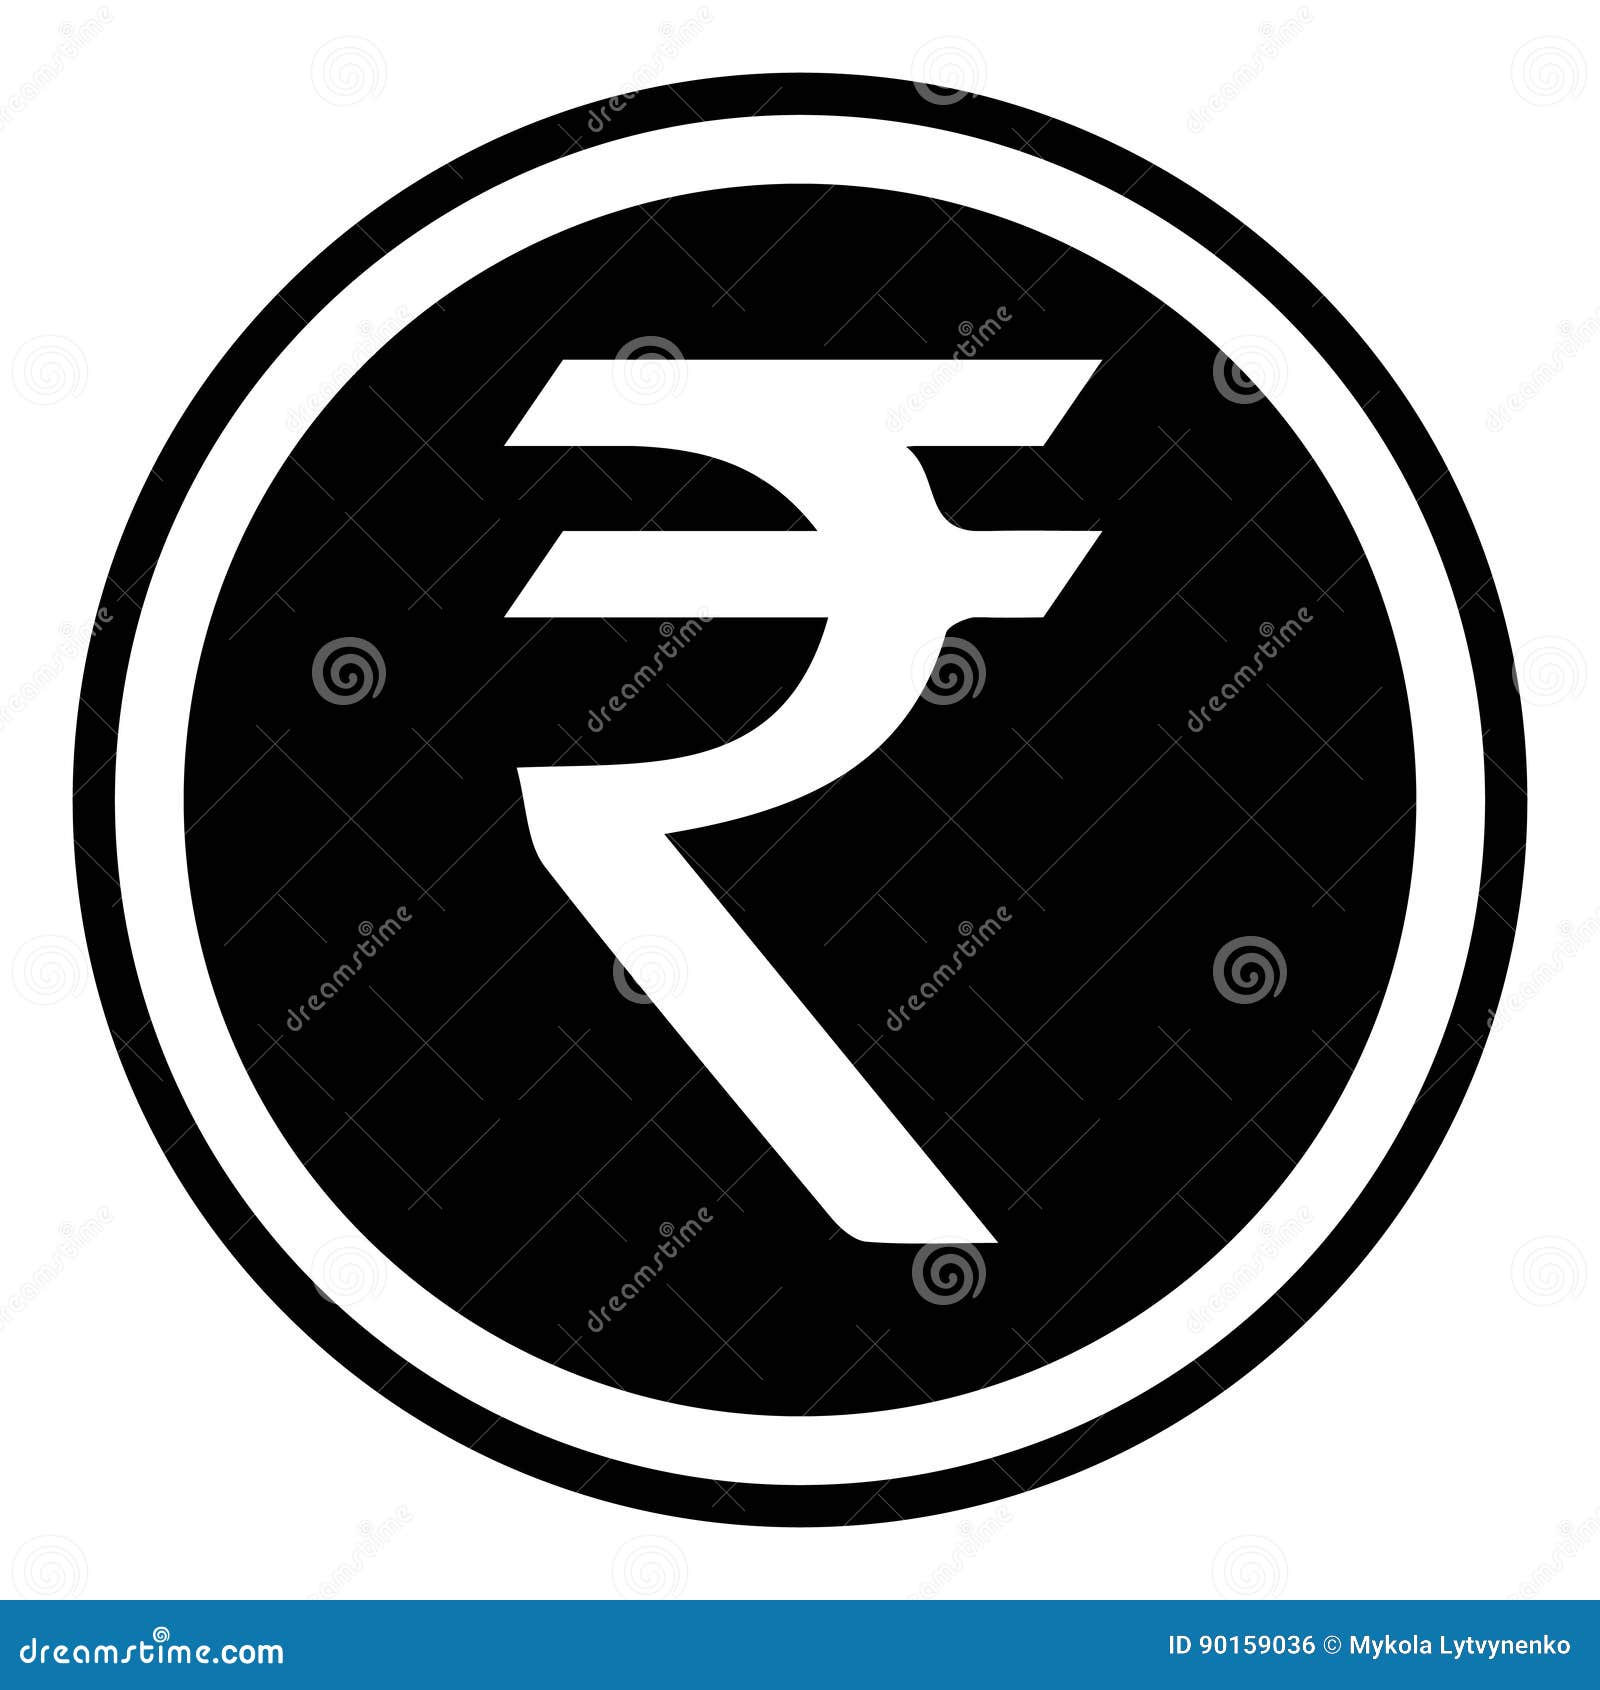 Индийские рупии обмен биткоин биткоины 10 минут